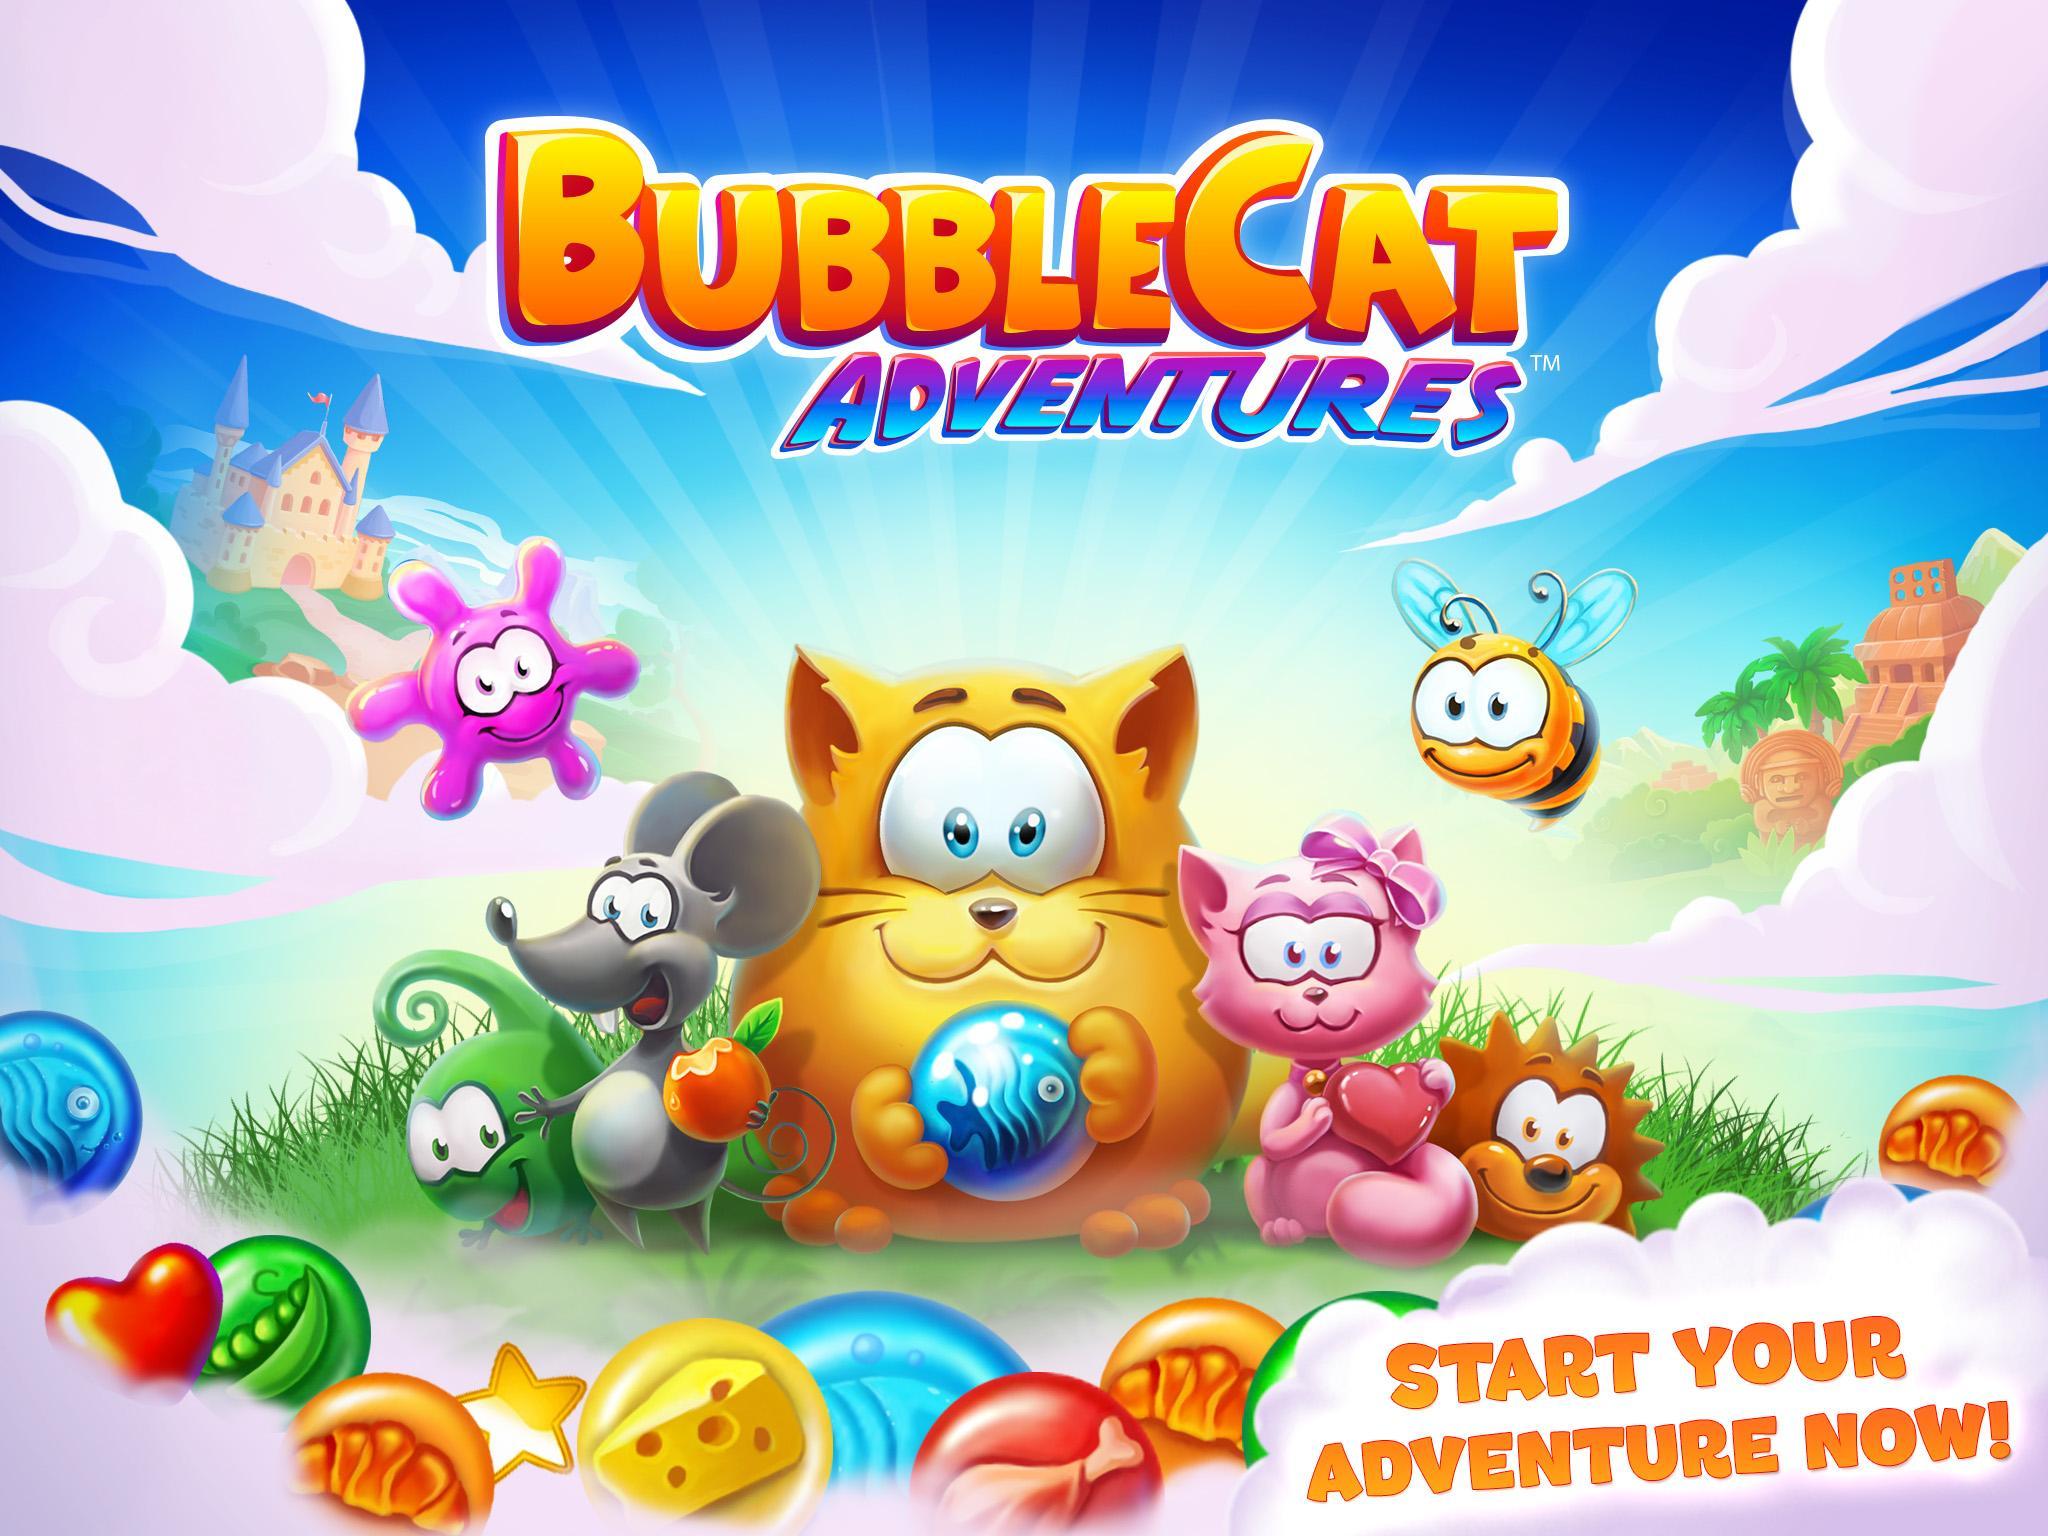 Кот бабл. Cat Adventure игра. Bubble Cat Adventures. Игра бублики шарики. Приключения котика бублика бабл-шутер.